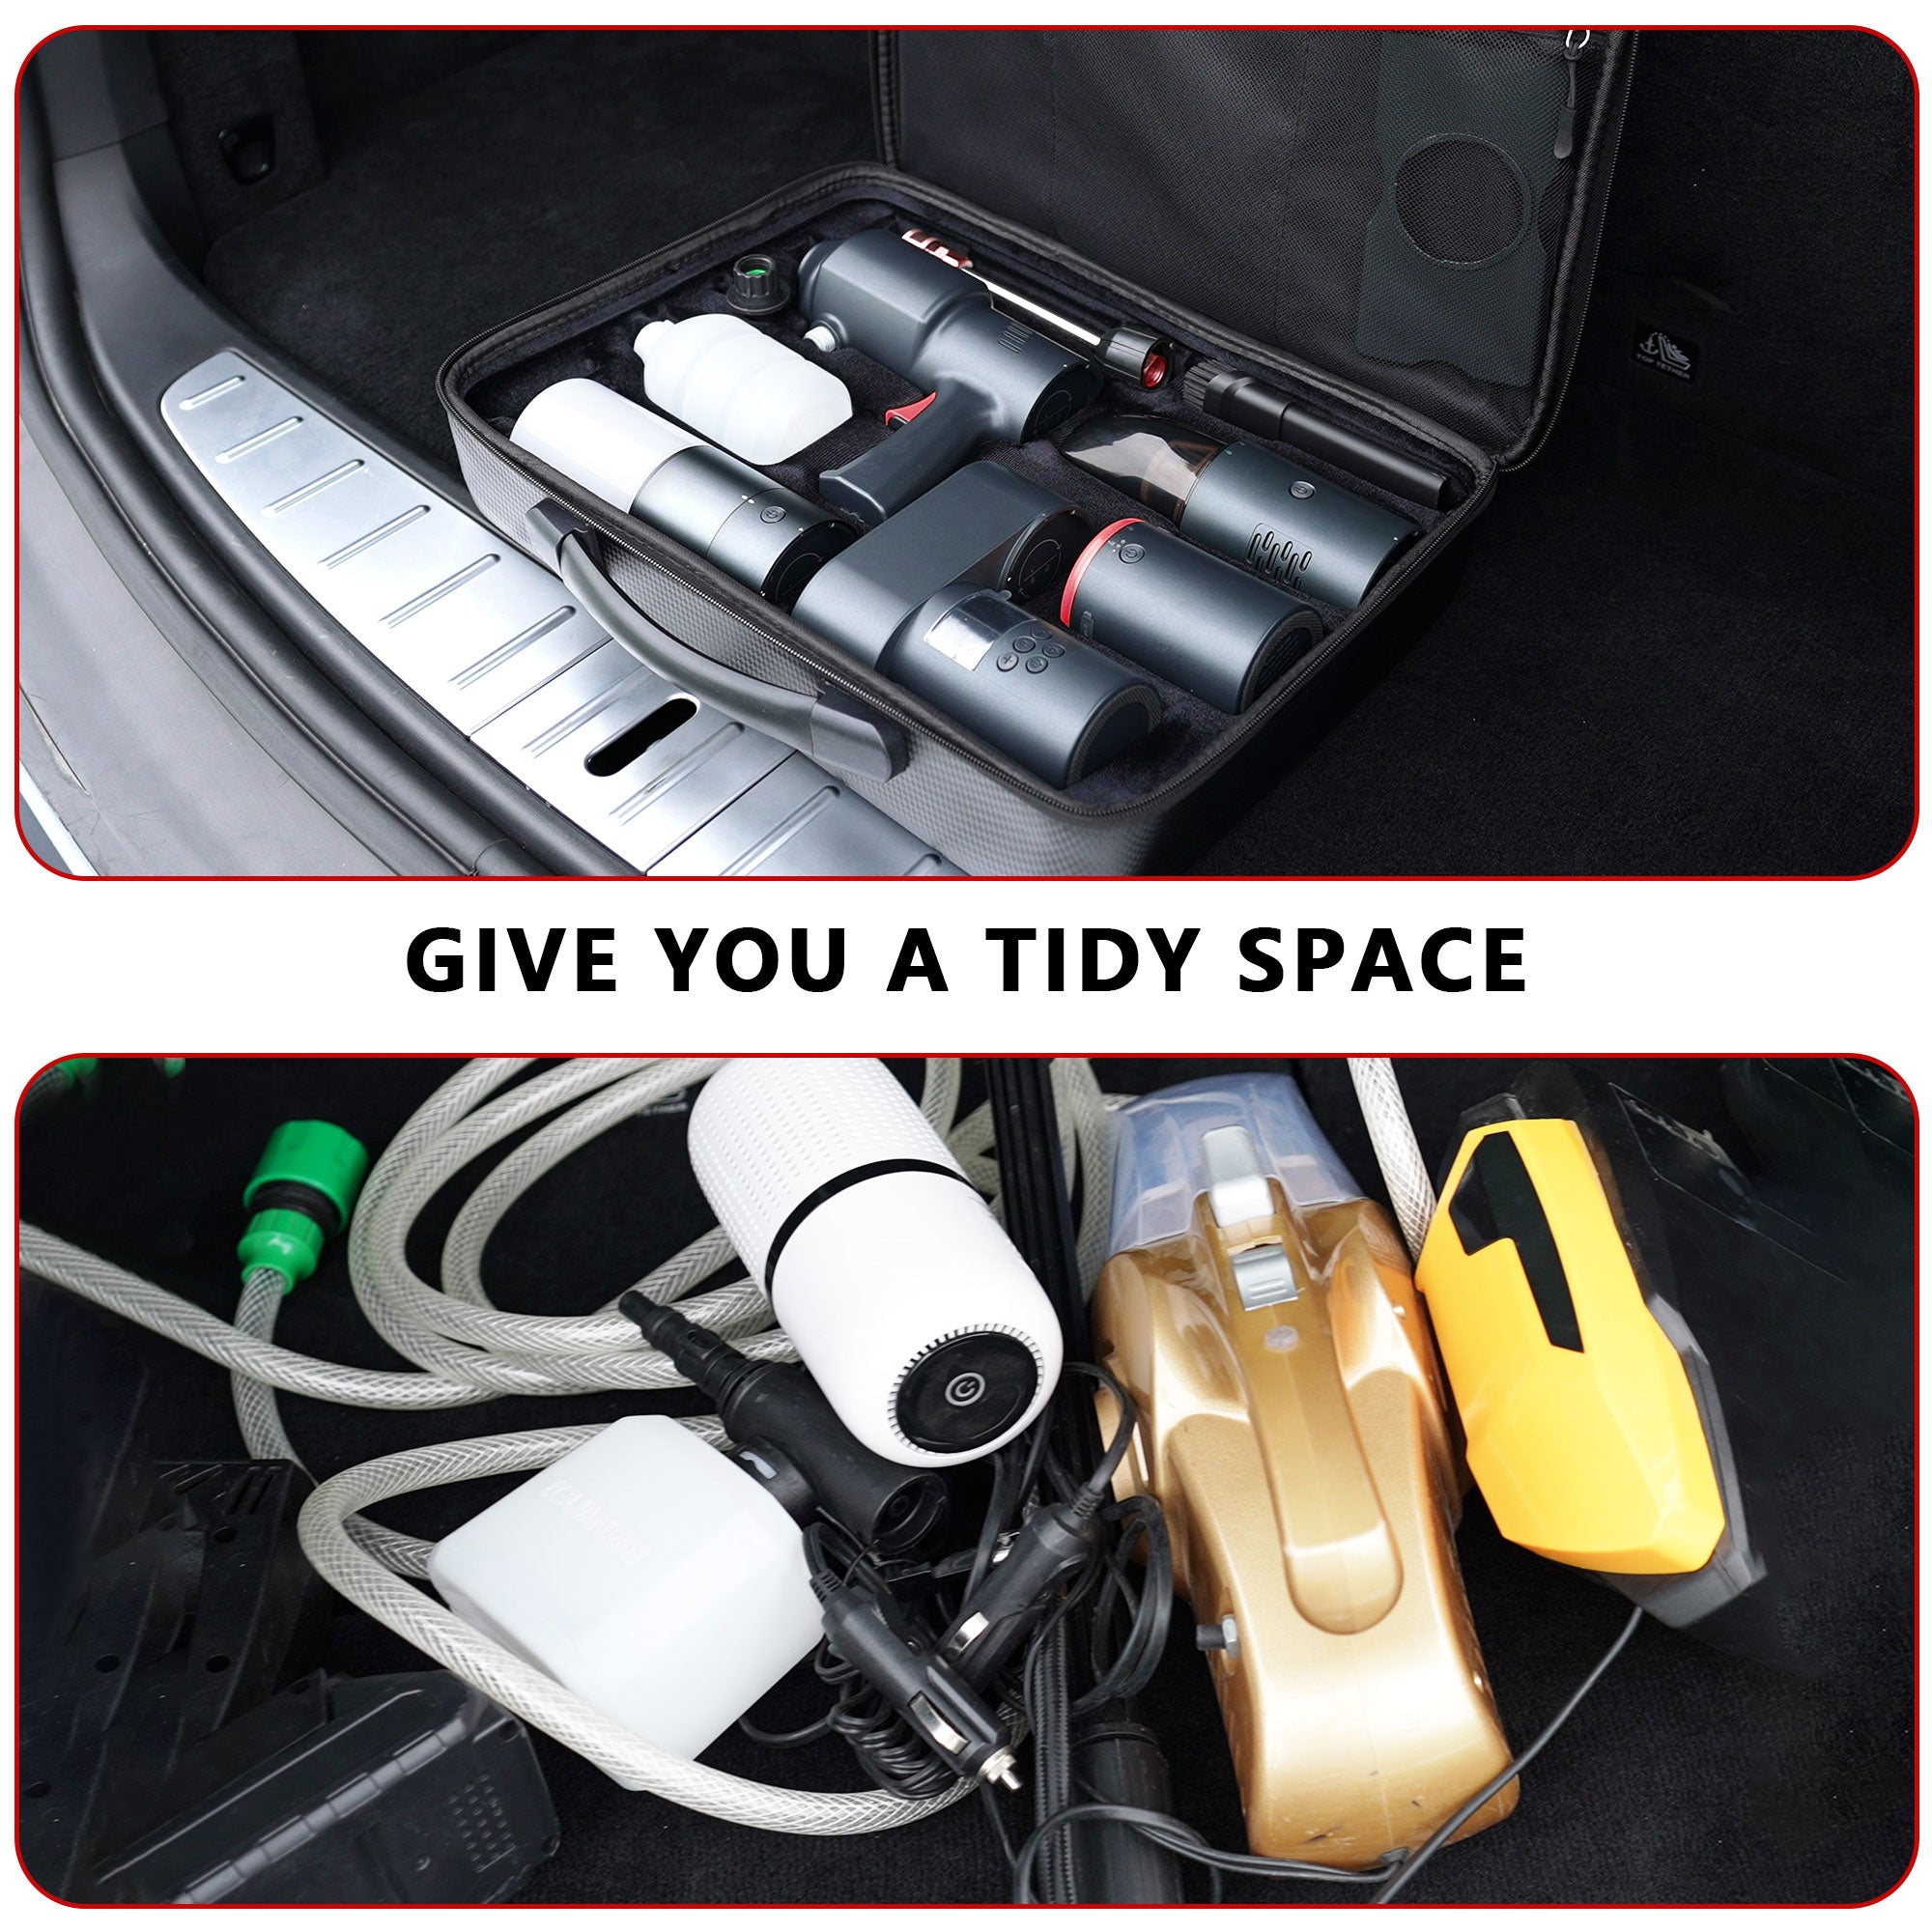 <tc>Teslaunch</tc> x BAYU Kit multifuncional para automóvil todo en uno: lavadora de automóviles, bomba de aire, aspiradora, linterna deslumbrante, cargador de teléfono móvil